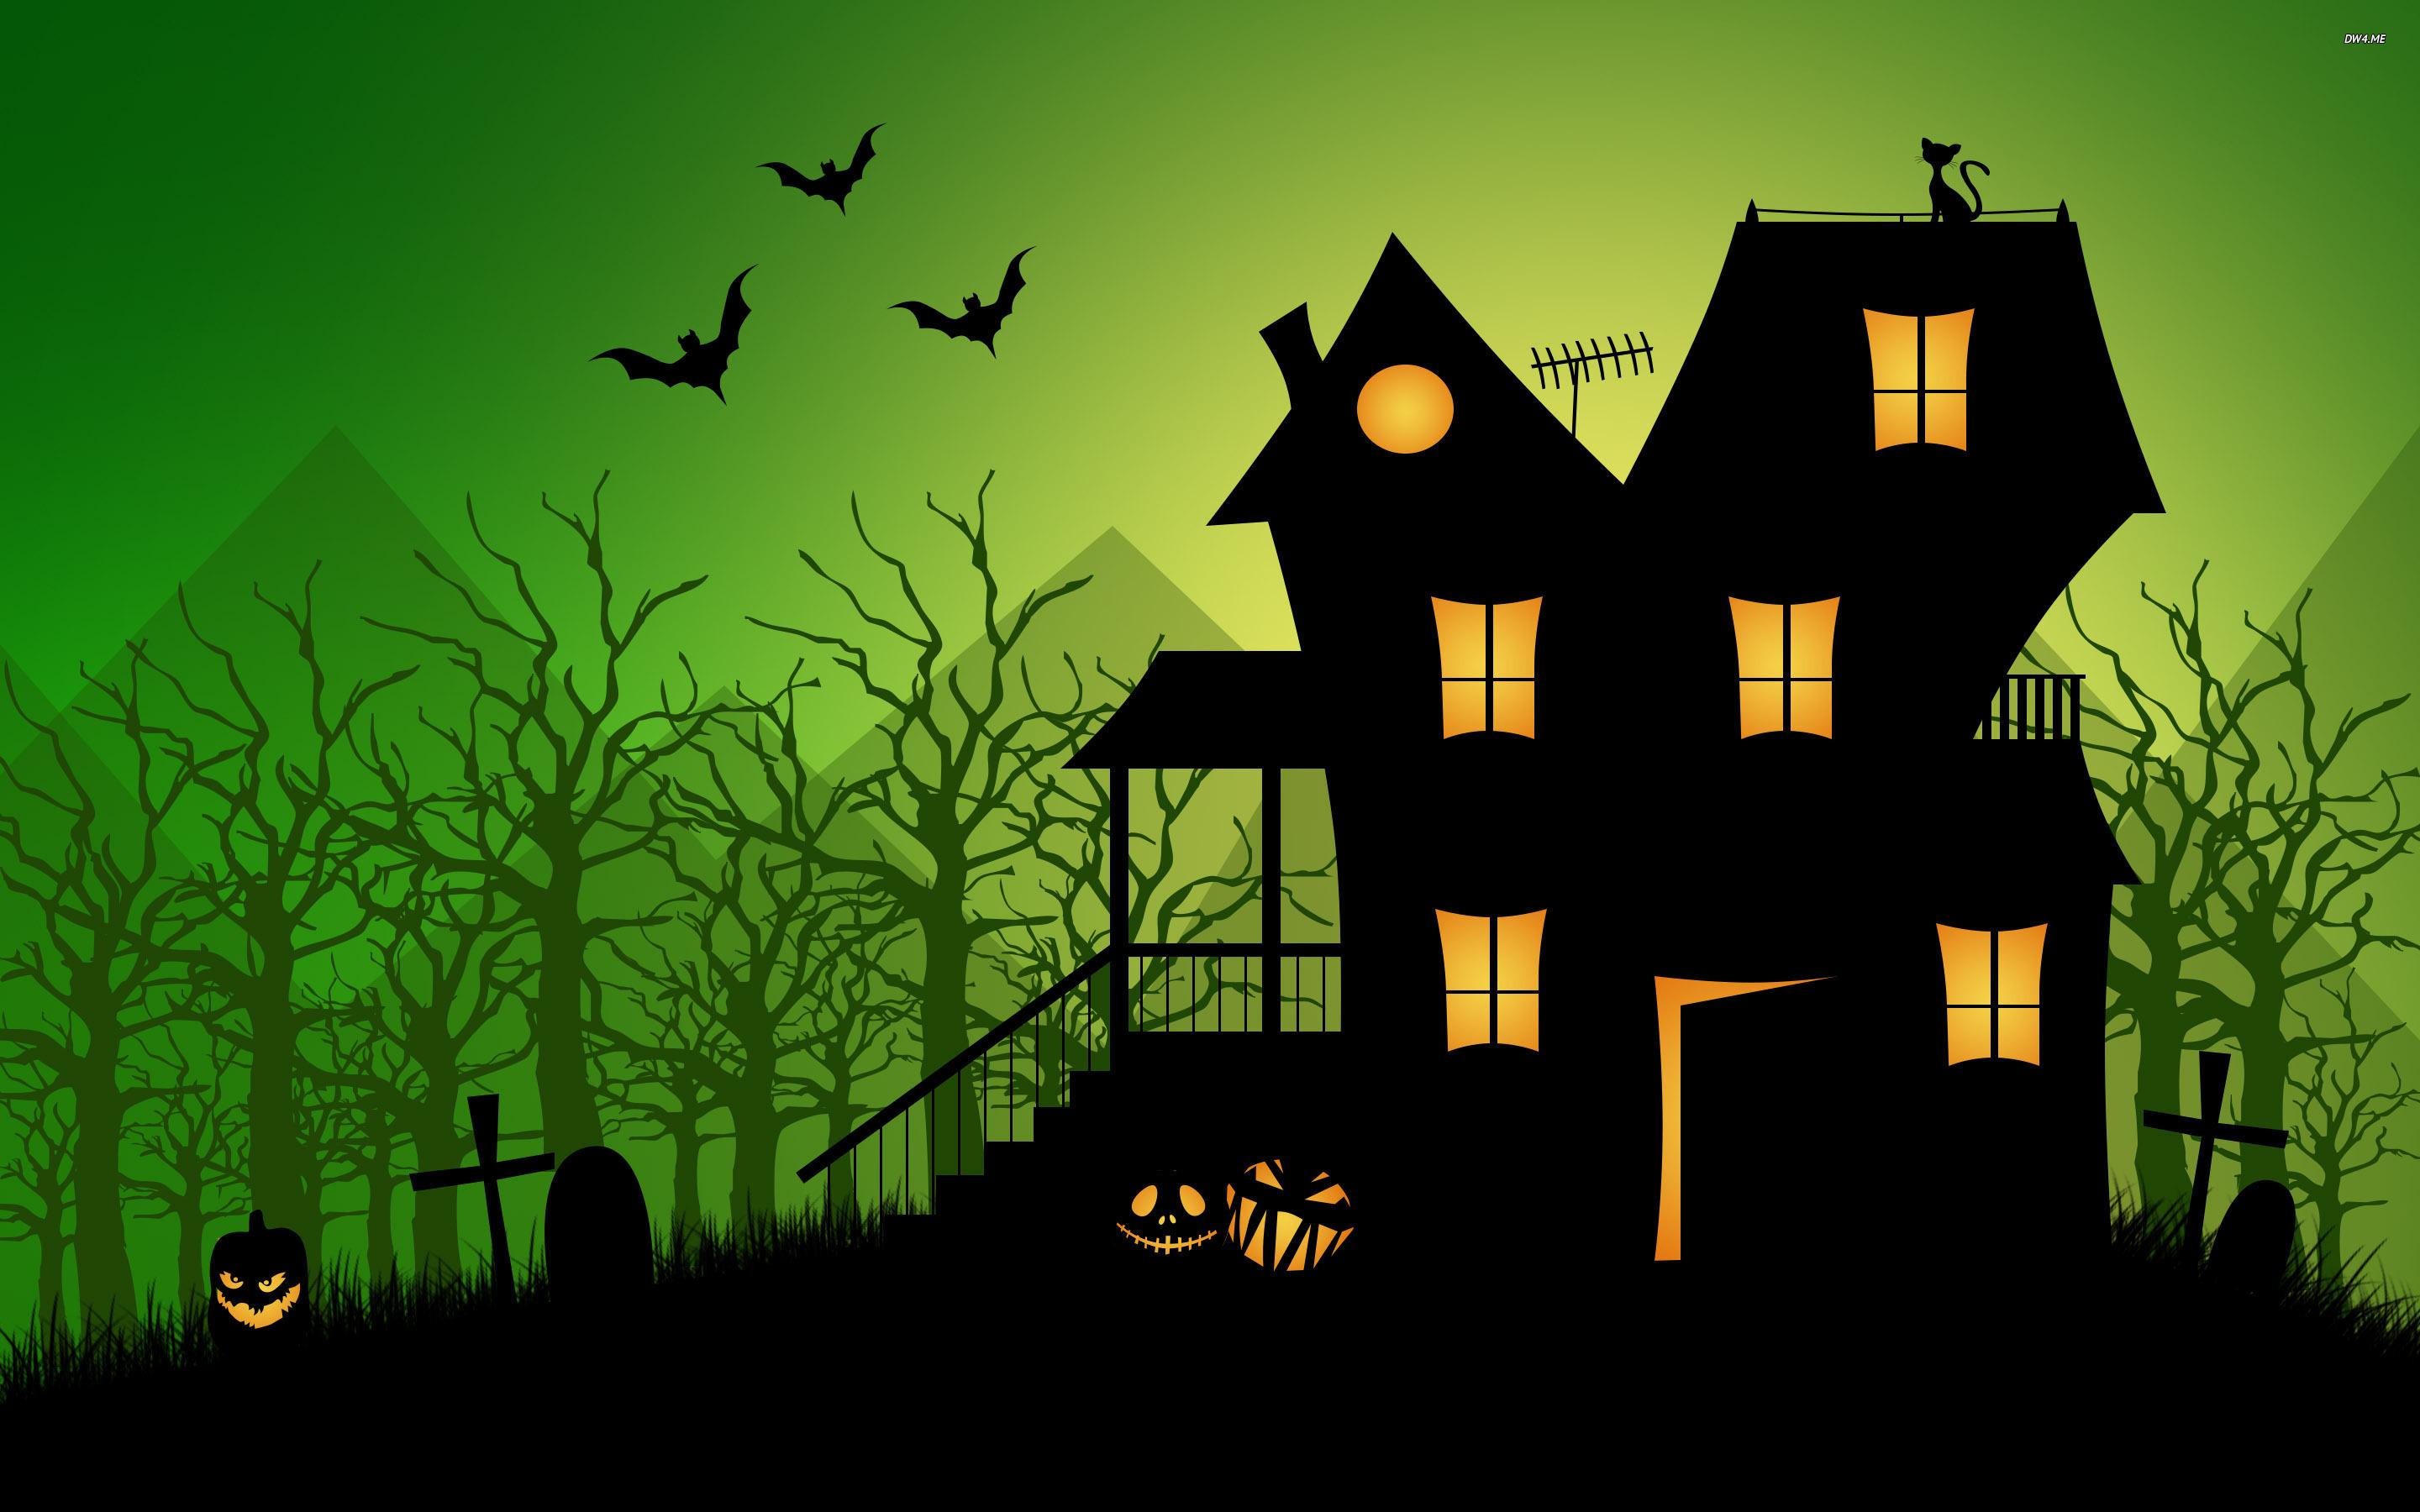 Haunted House Halloween Imagefoto.com